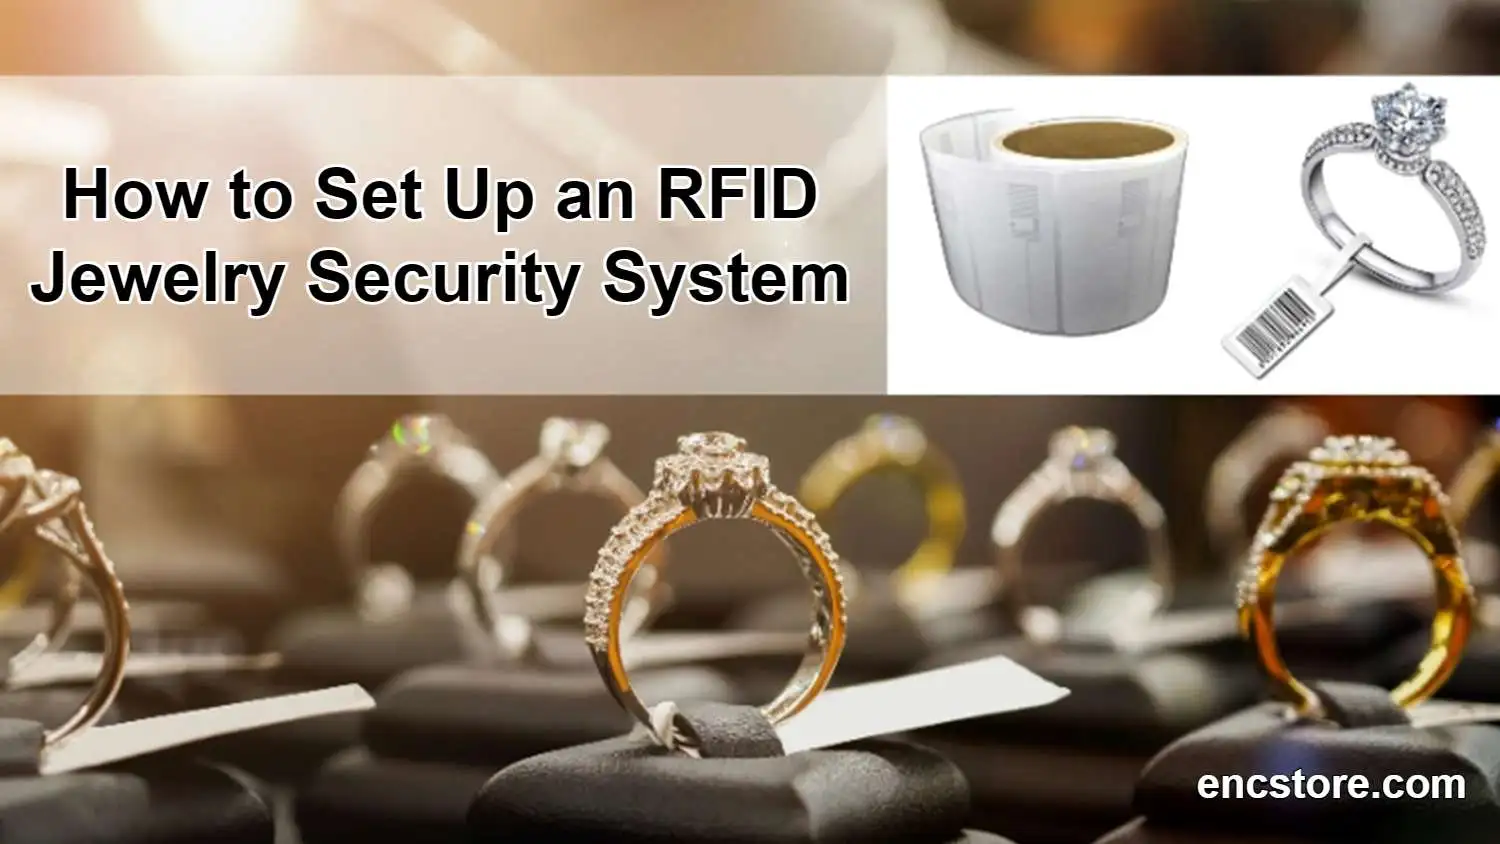 RFID Jewelry Security System